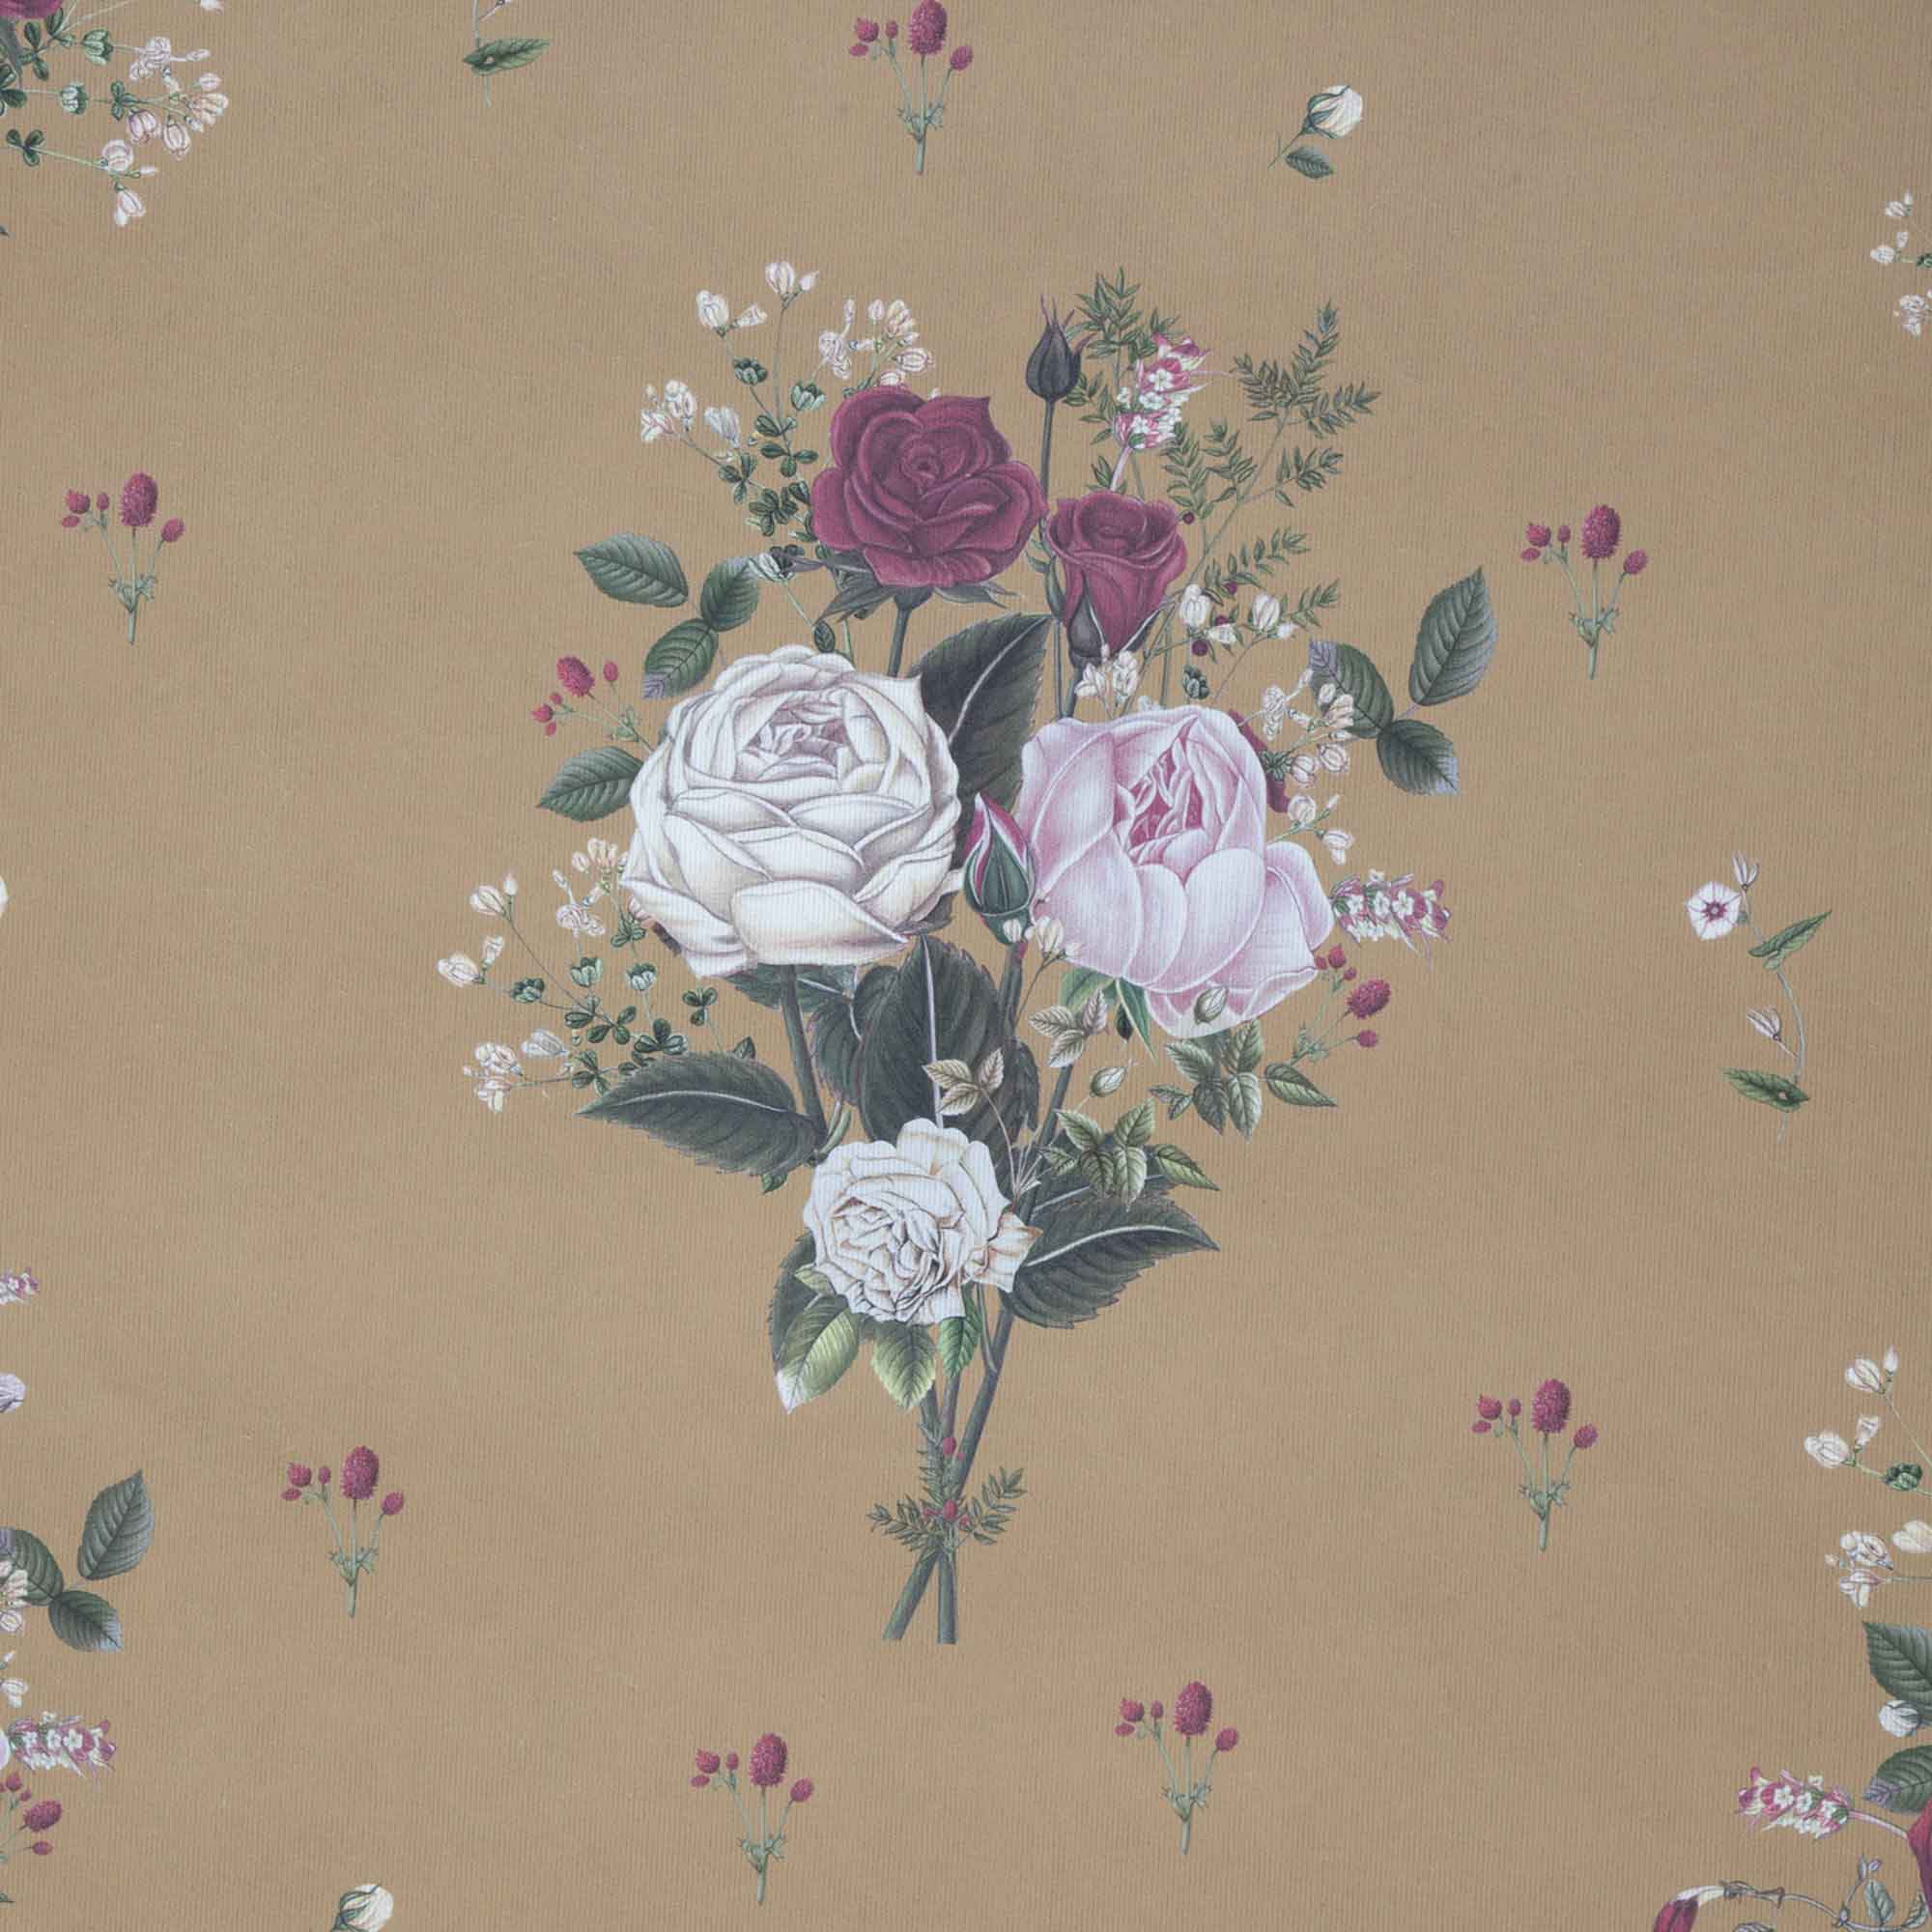 Roses at Queen Mary’s Garden - Wallpaper Swatch 18cm x 25cm